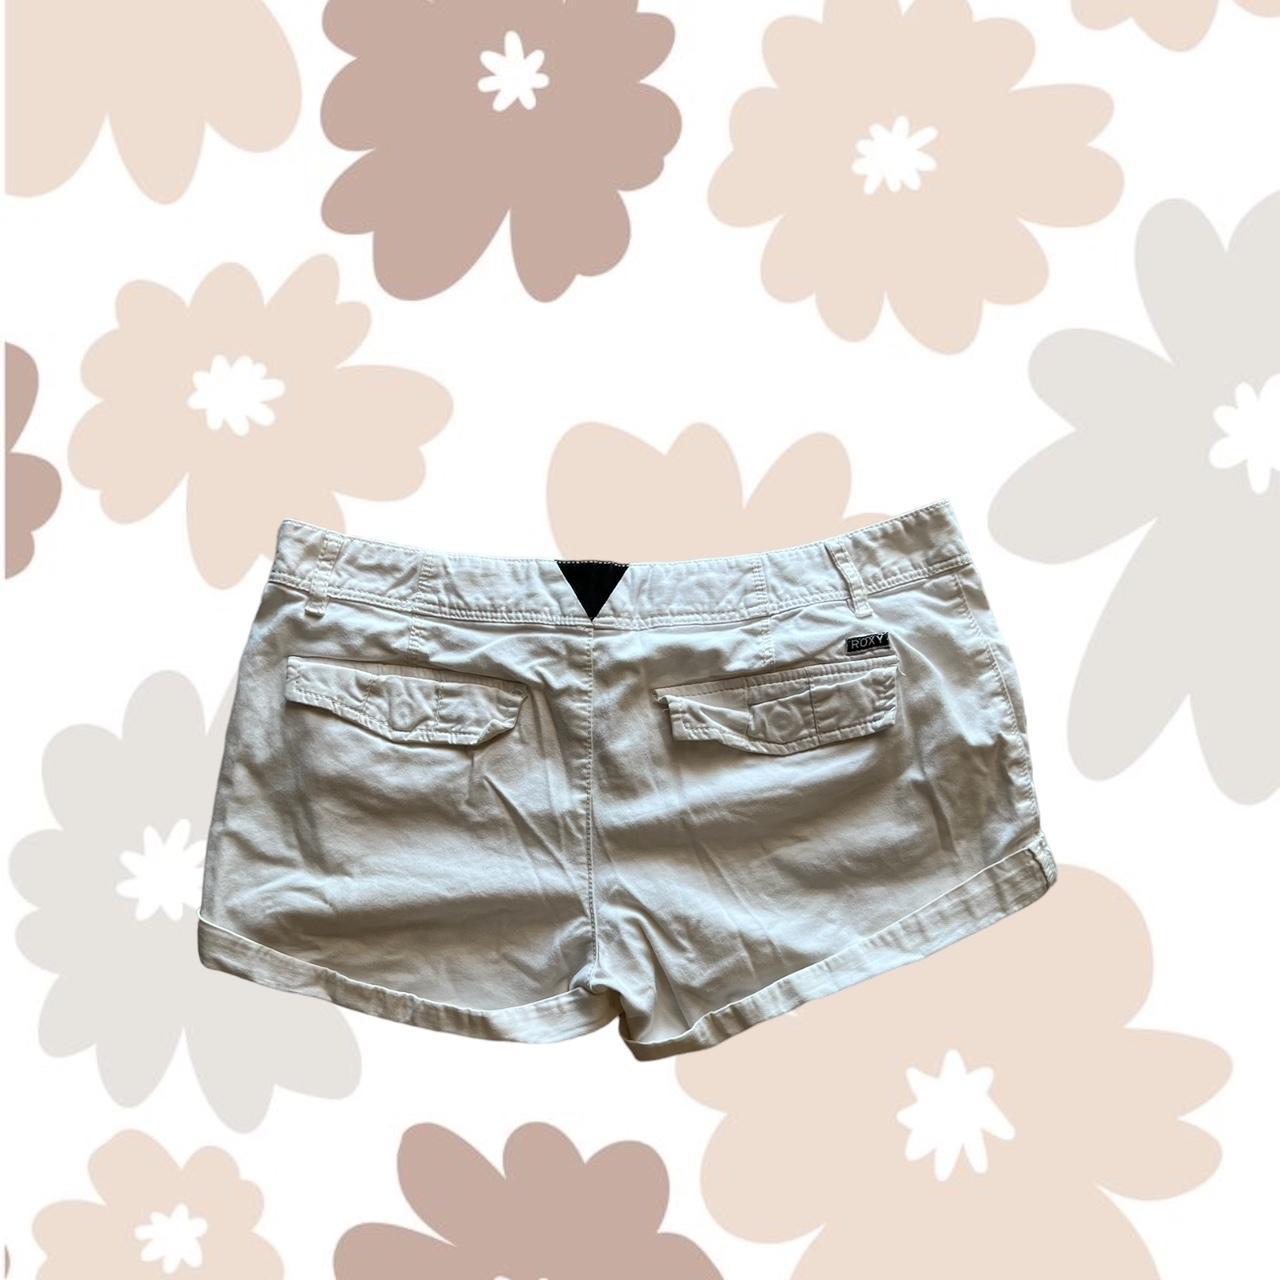 Roxy Women's Tan and White Shorts (2)